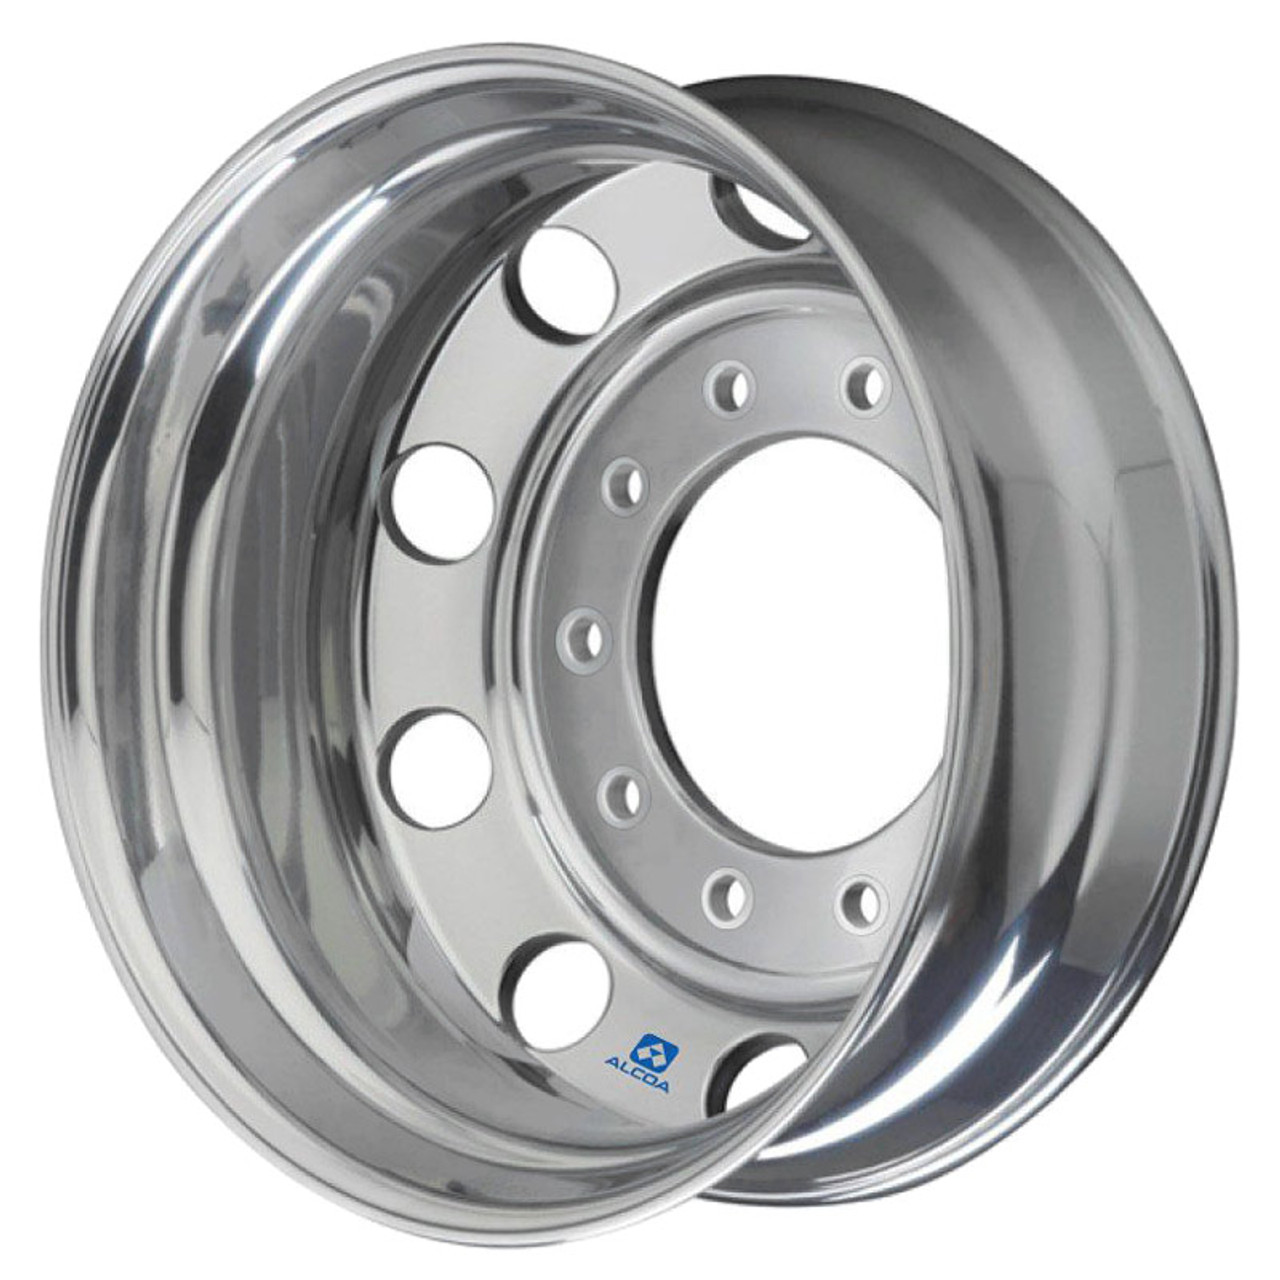 Aluminum Wheel Rim 24.5 X 8.25 10 Hole Lug Hub-Pilot for Tractor Truck & Trailer